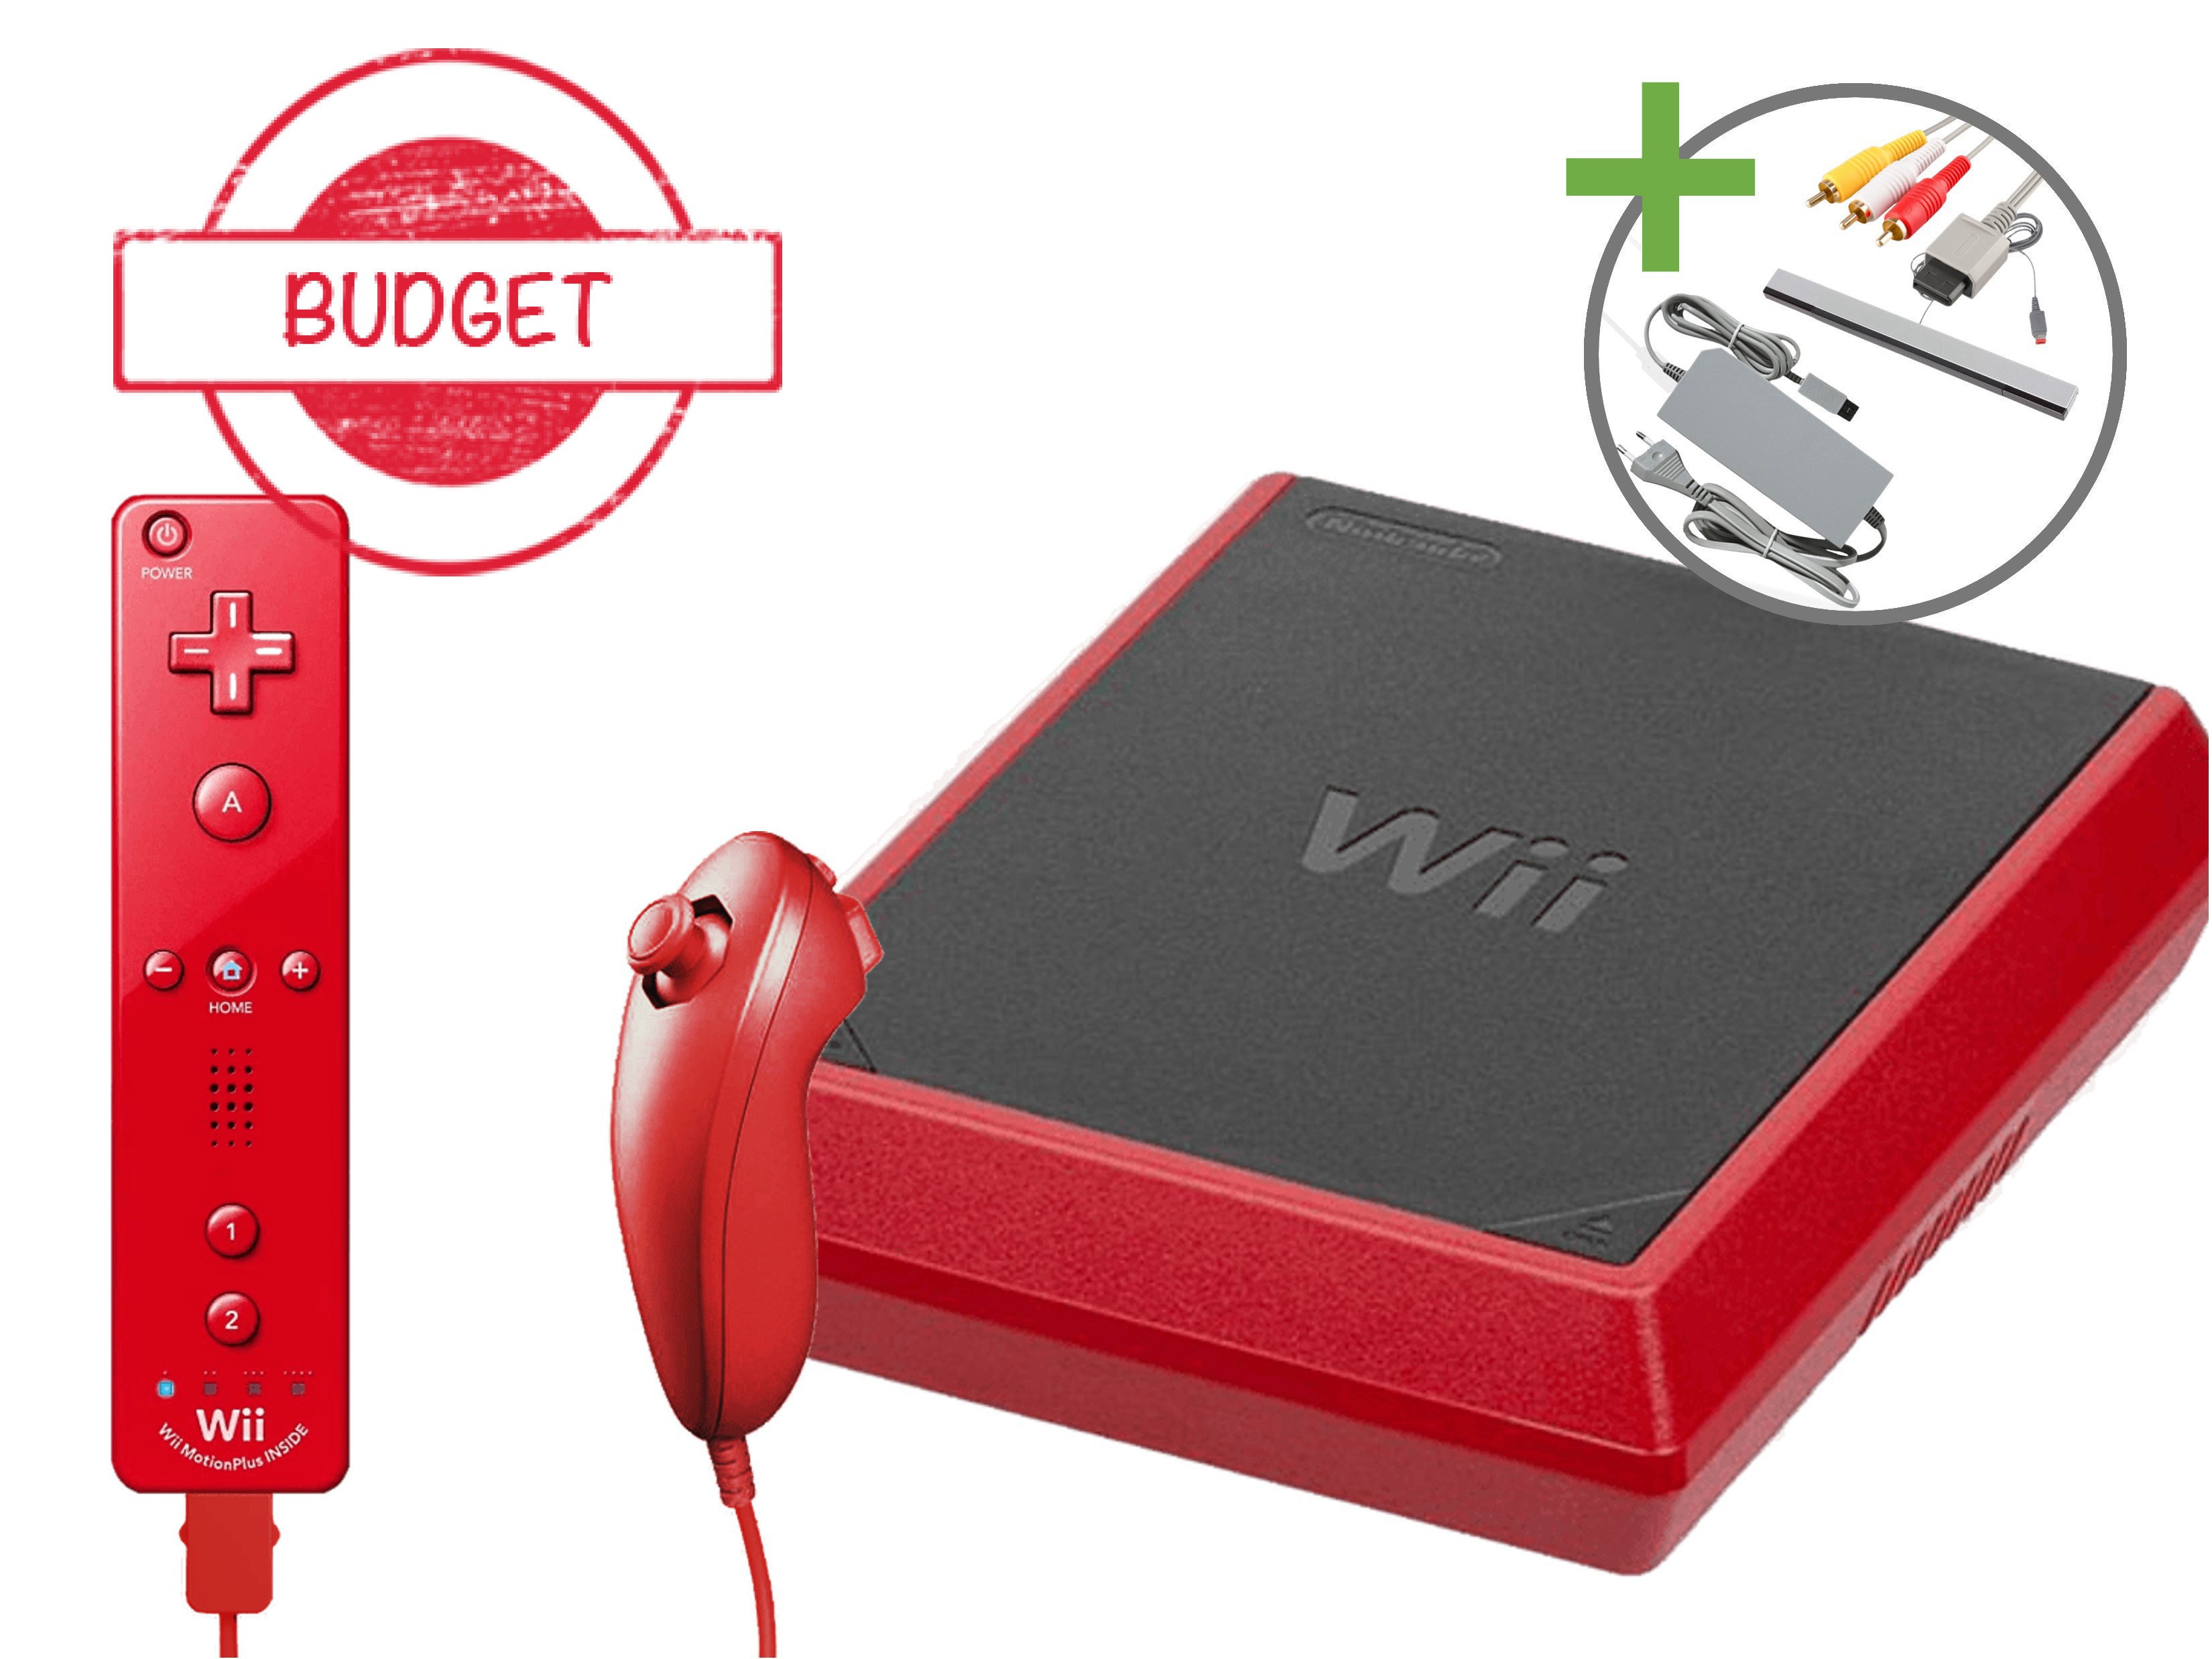 Nintendo Wii Mini Starter Pack - Motion Plus Edition - Budget Kopen | Wii Hardware